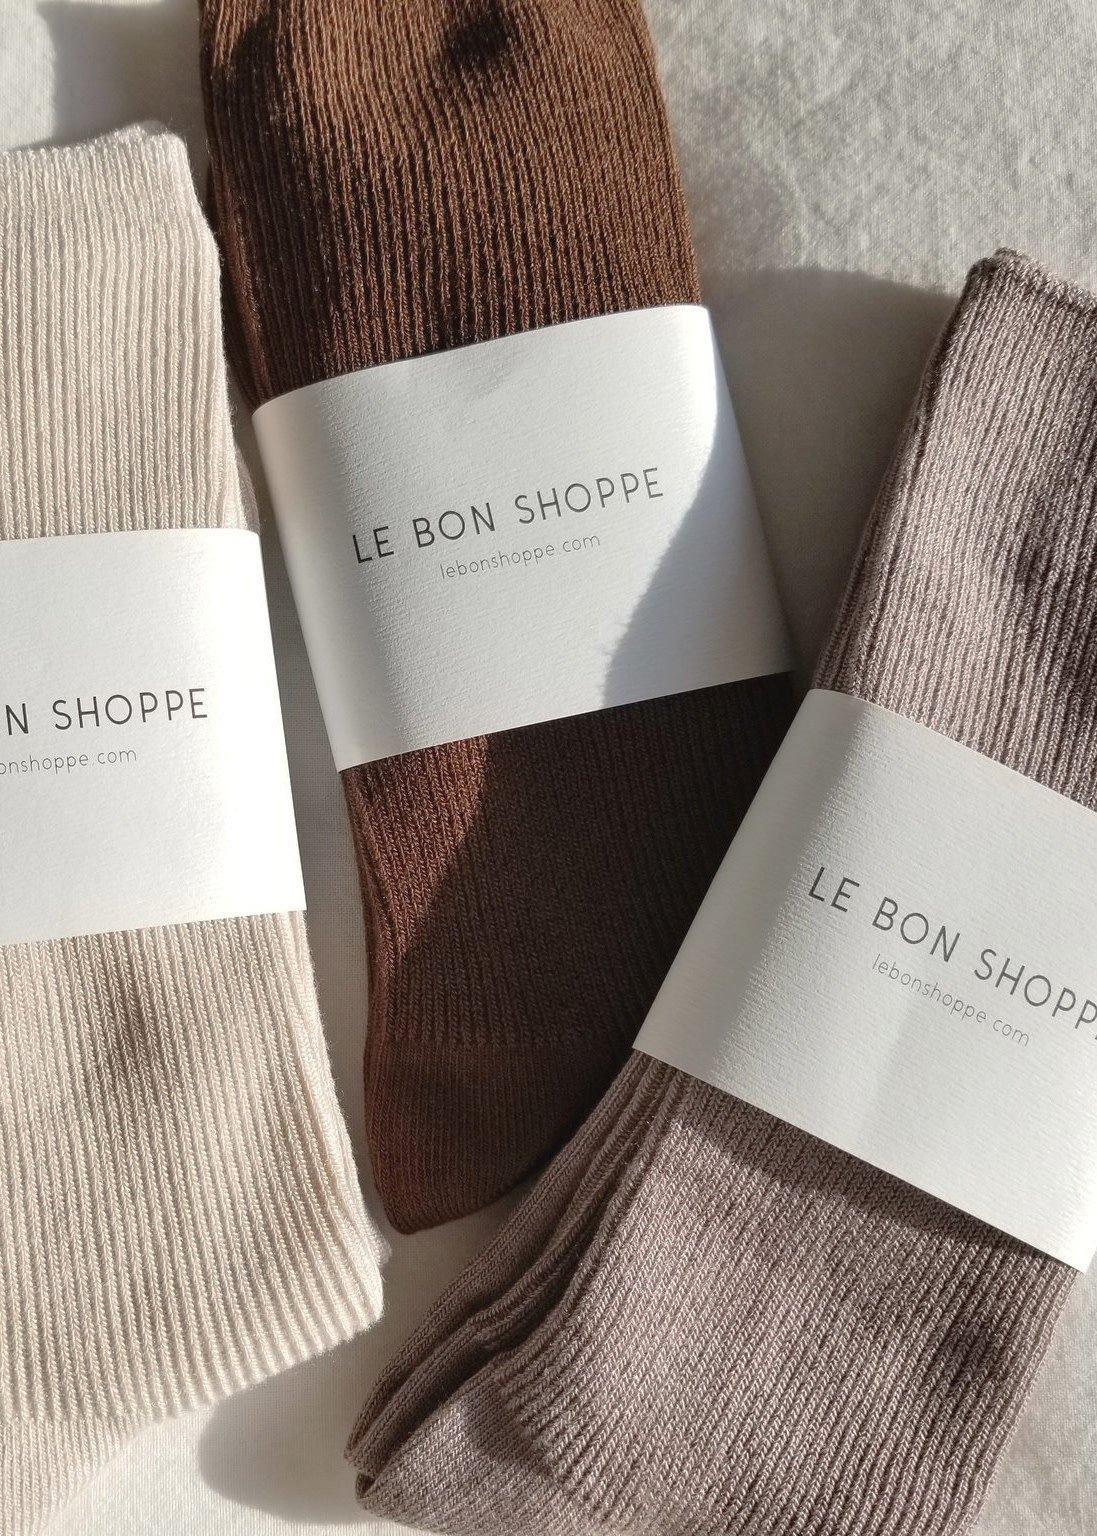 esprit trouser socks brown size 9-11 | eBay